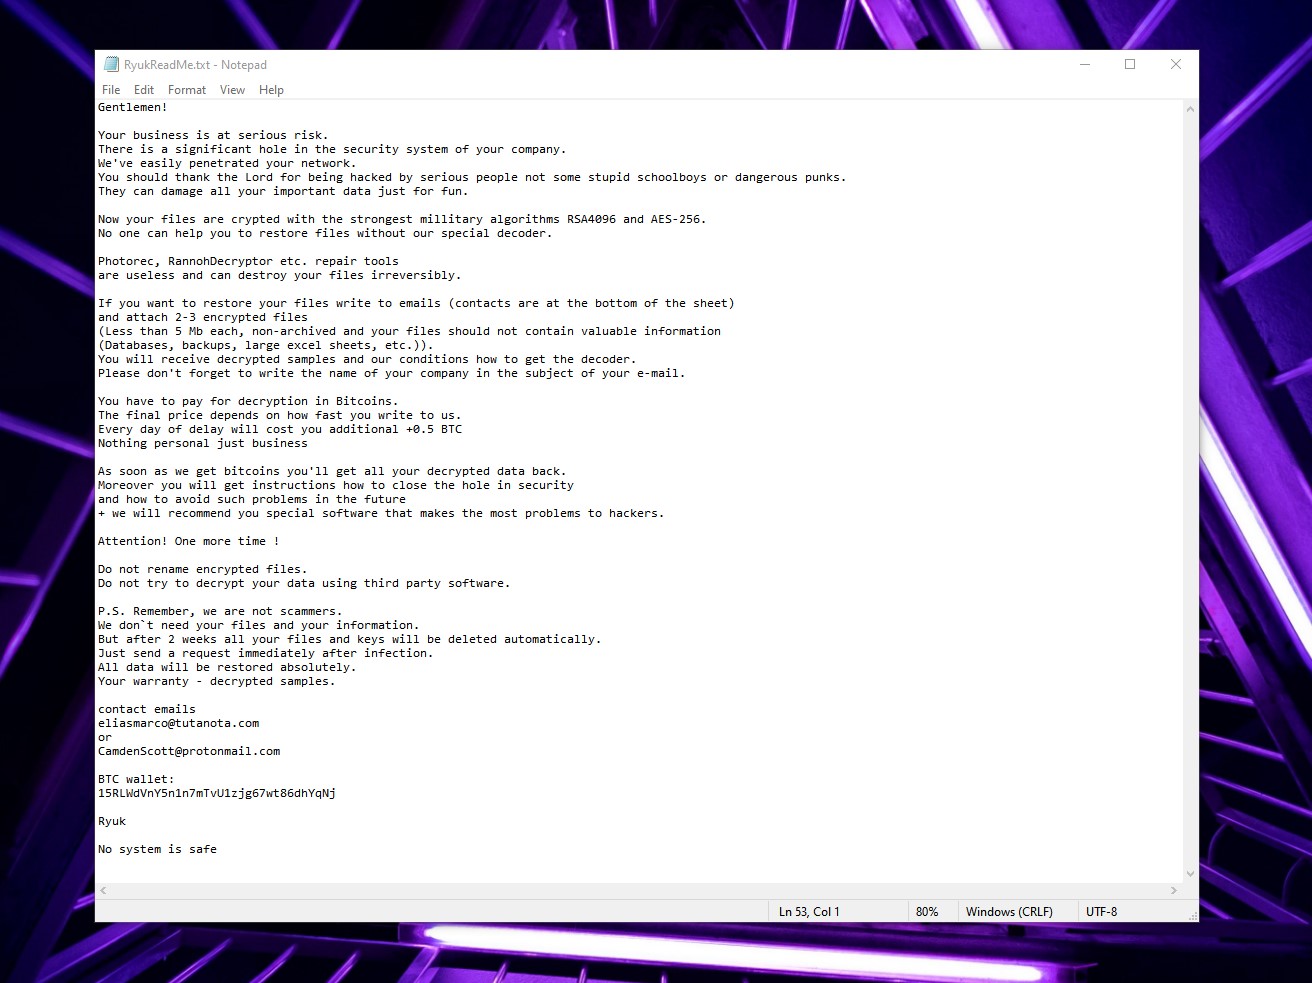 RYUK ransomware attack message